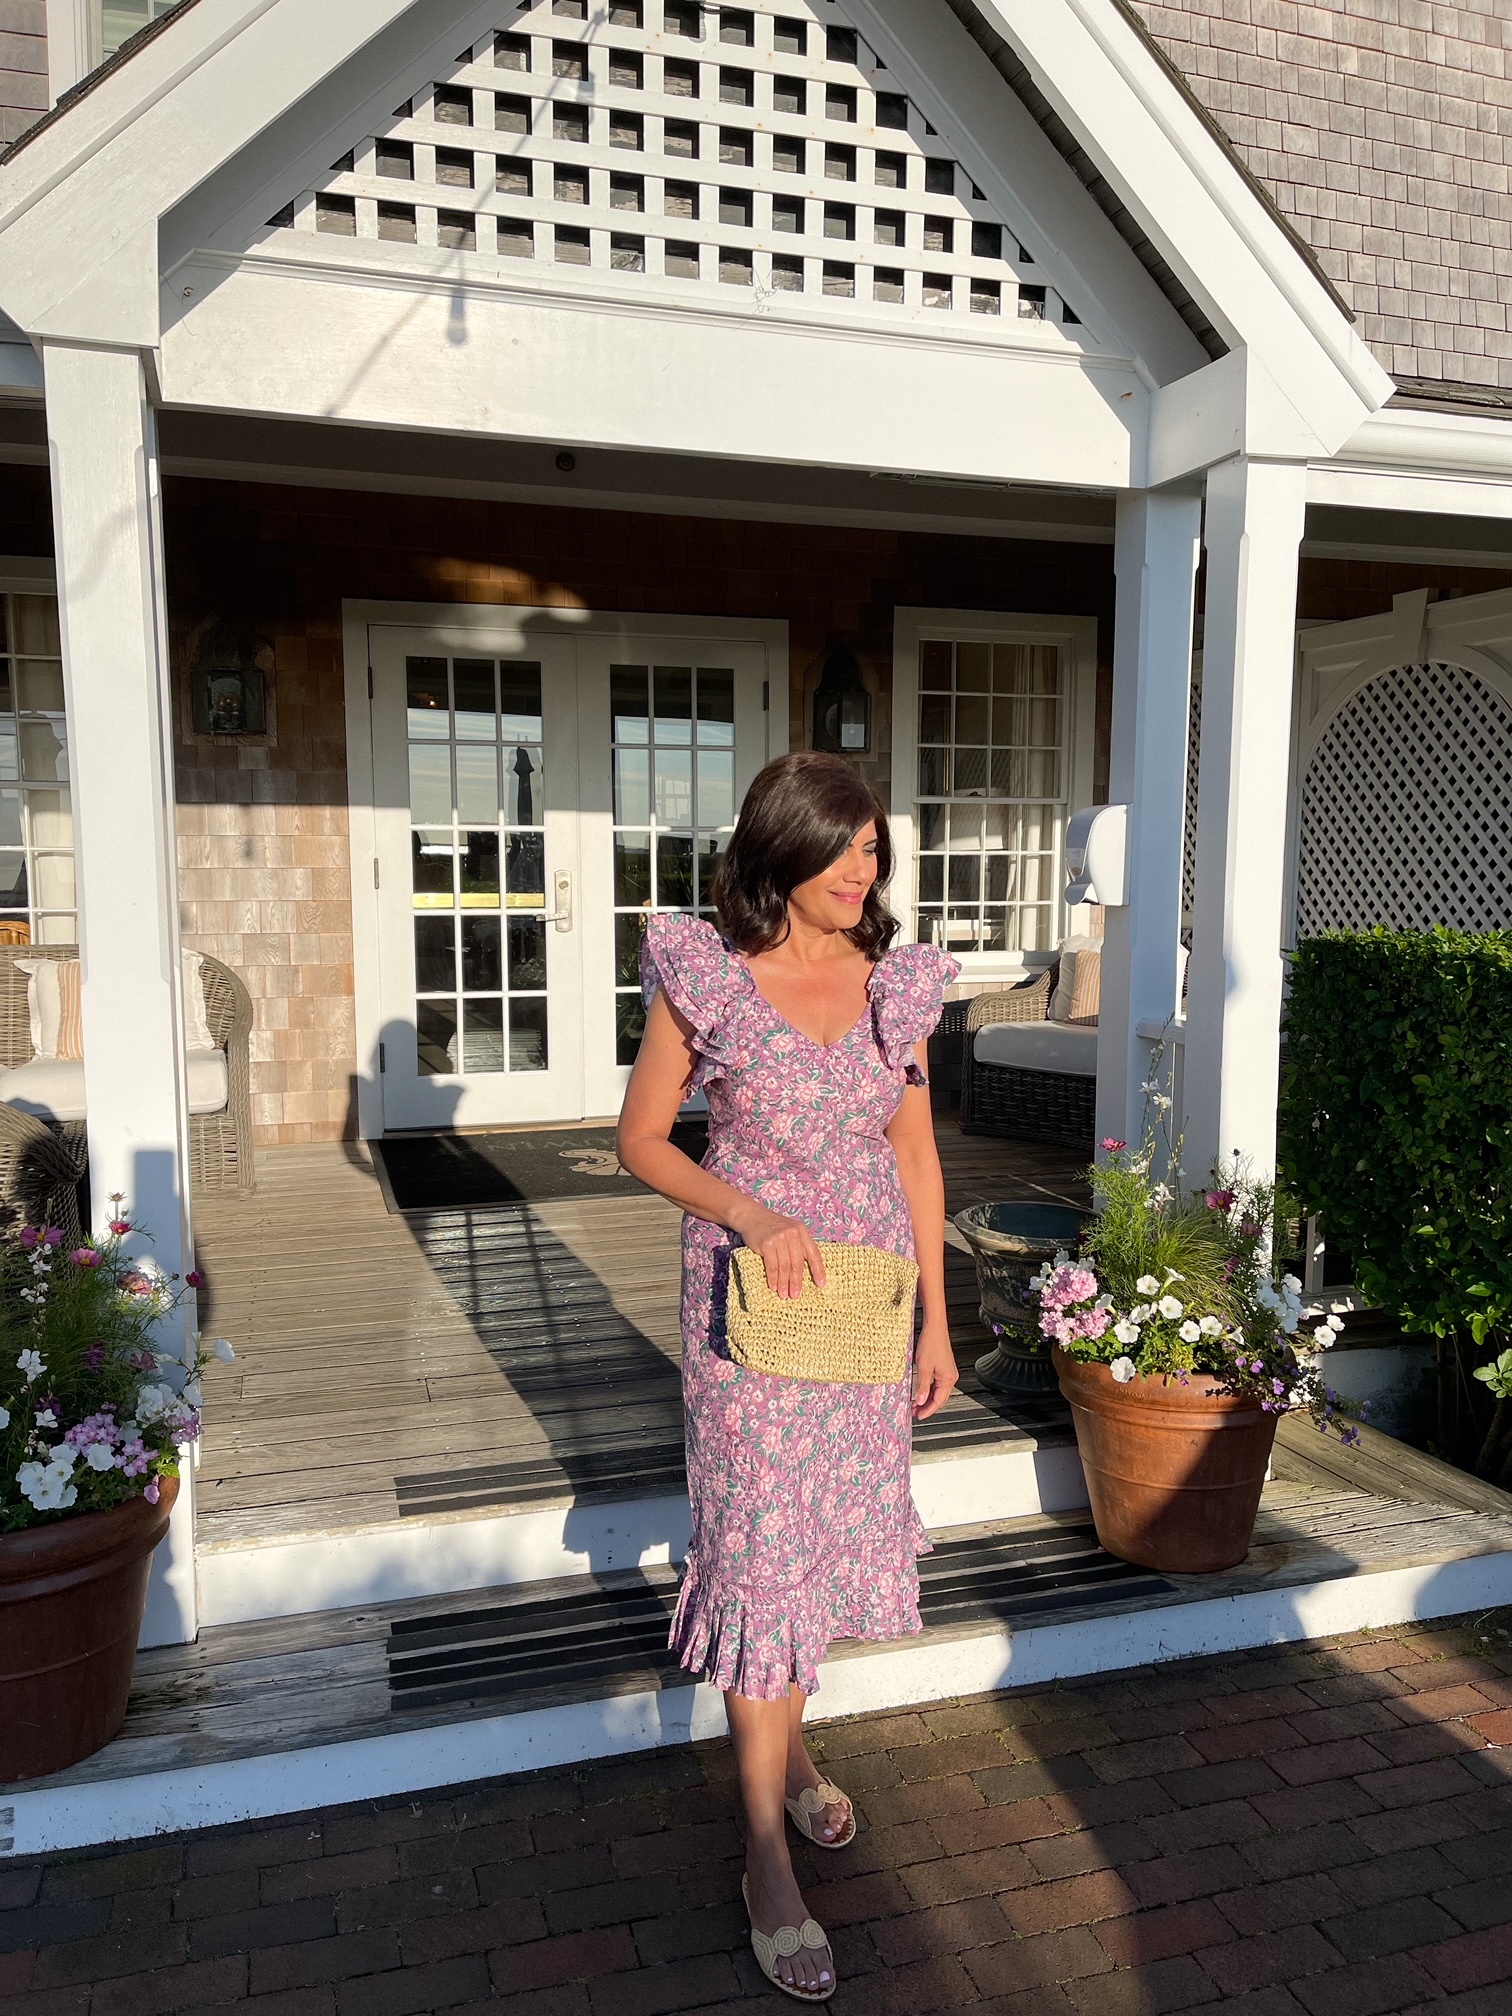 Desiree Leone of Beautifully Seaside wearing block print summer dresses in Nantucket